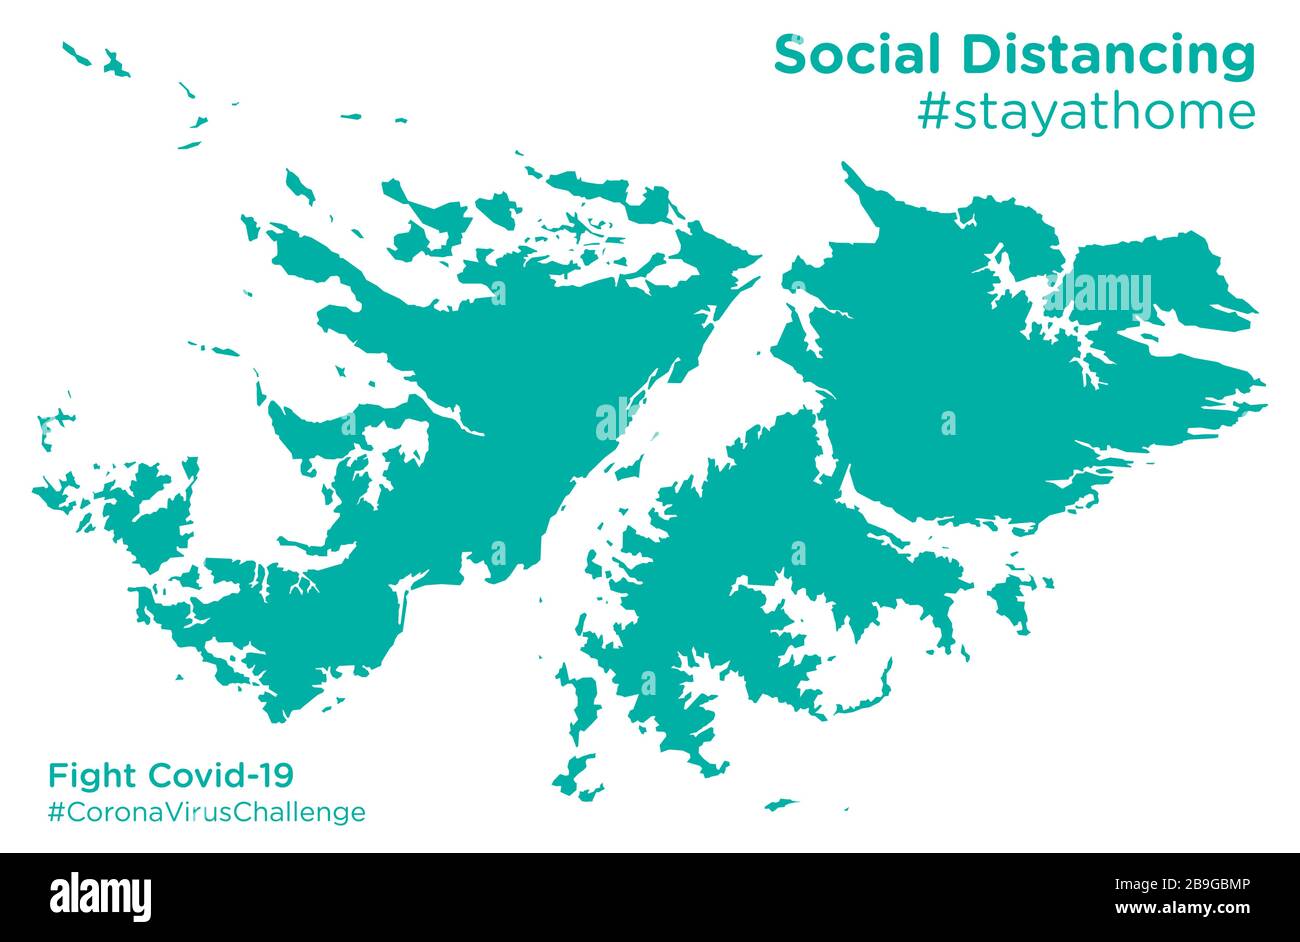 Falkland Islands Karte mit Social Distancing #stayathome Tag Stock Vektor